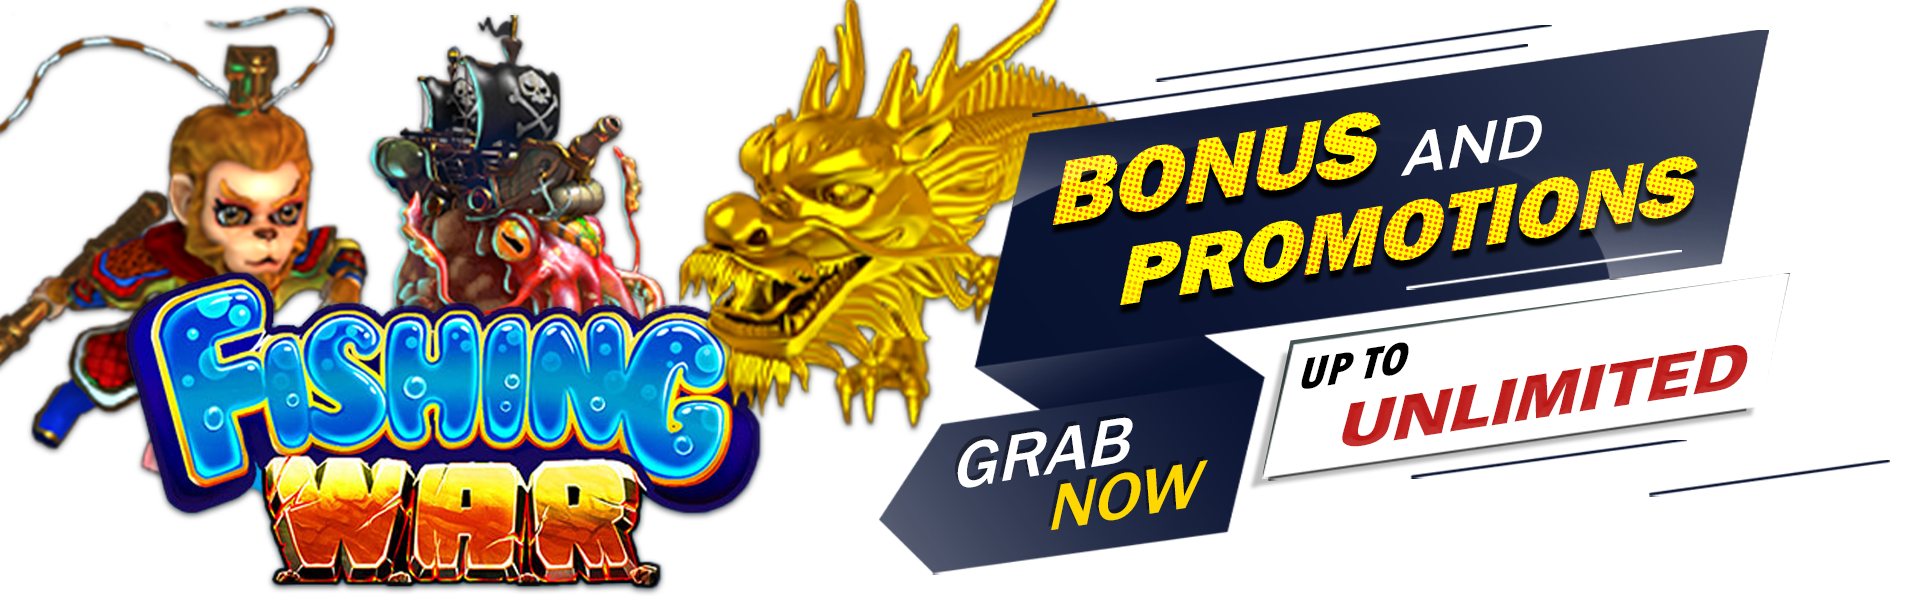 fishing war bonus and promotions banner